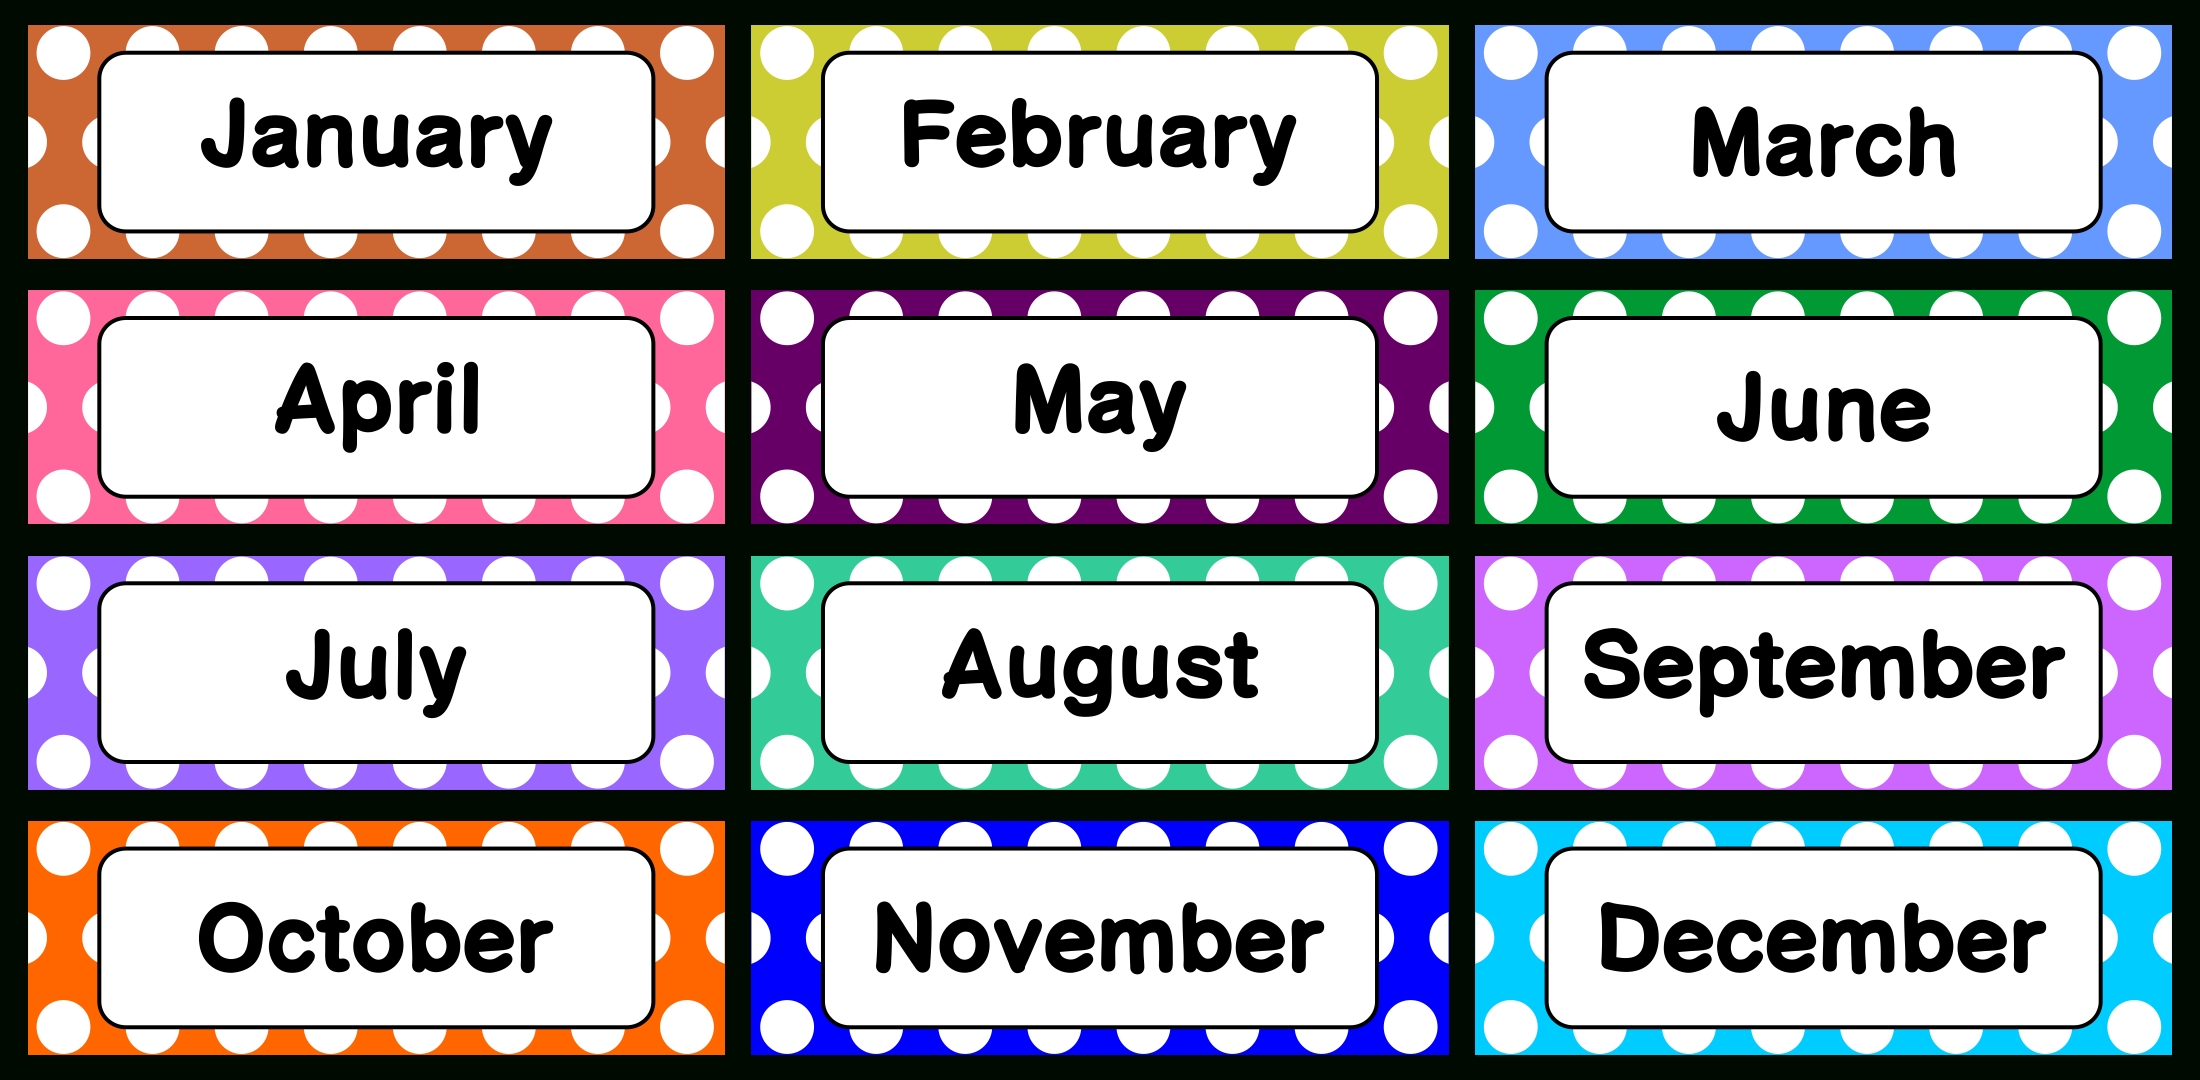 Free Printable Calander Monthly Headers Month Calendar Printable